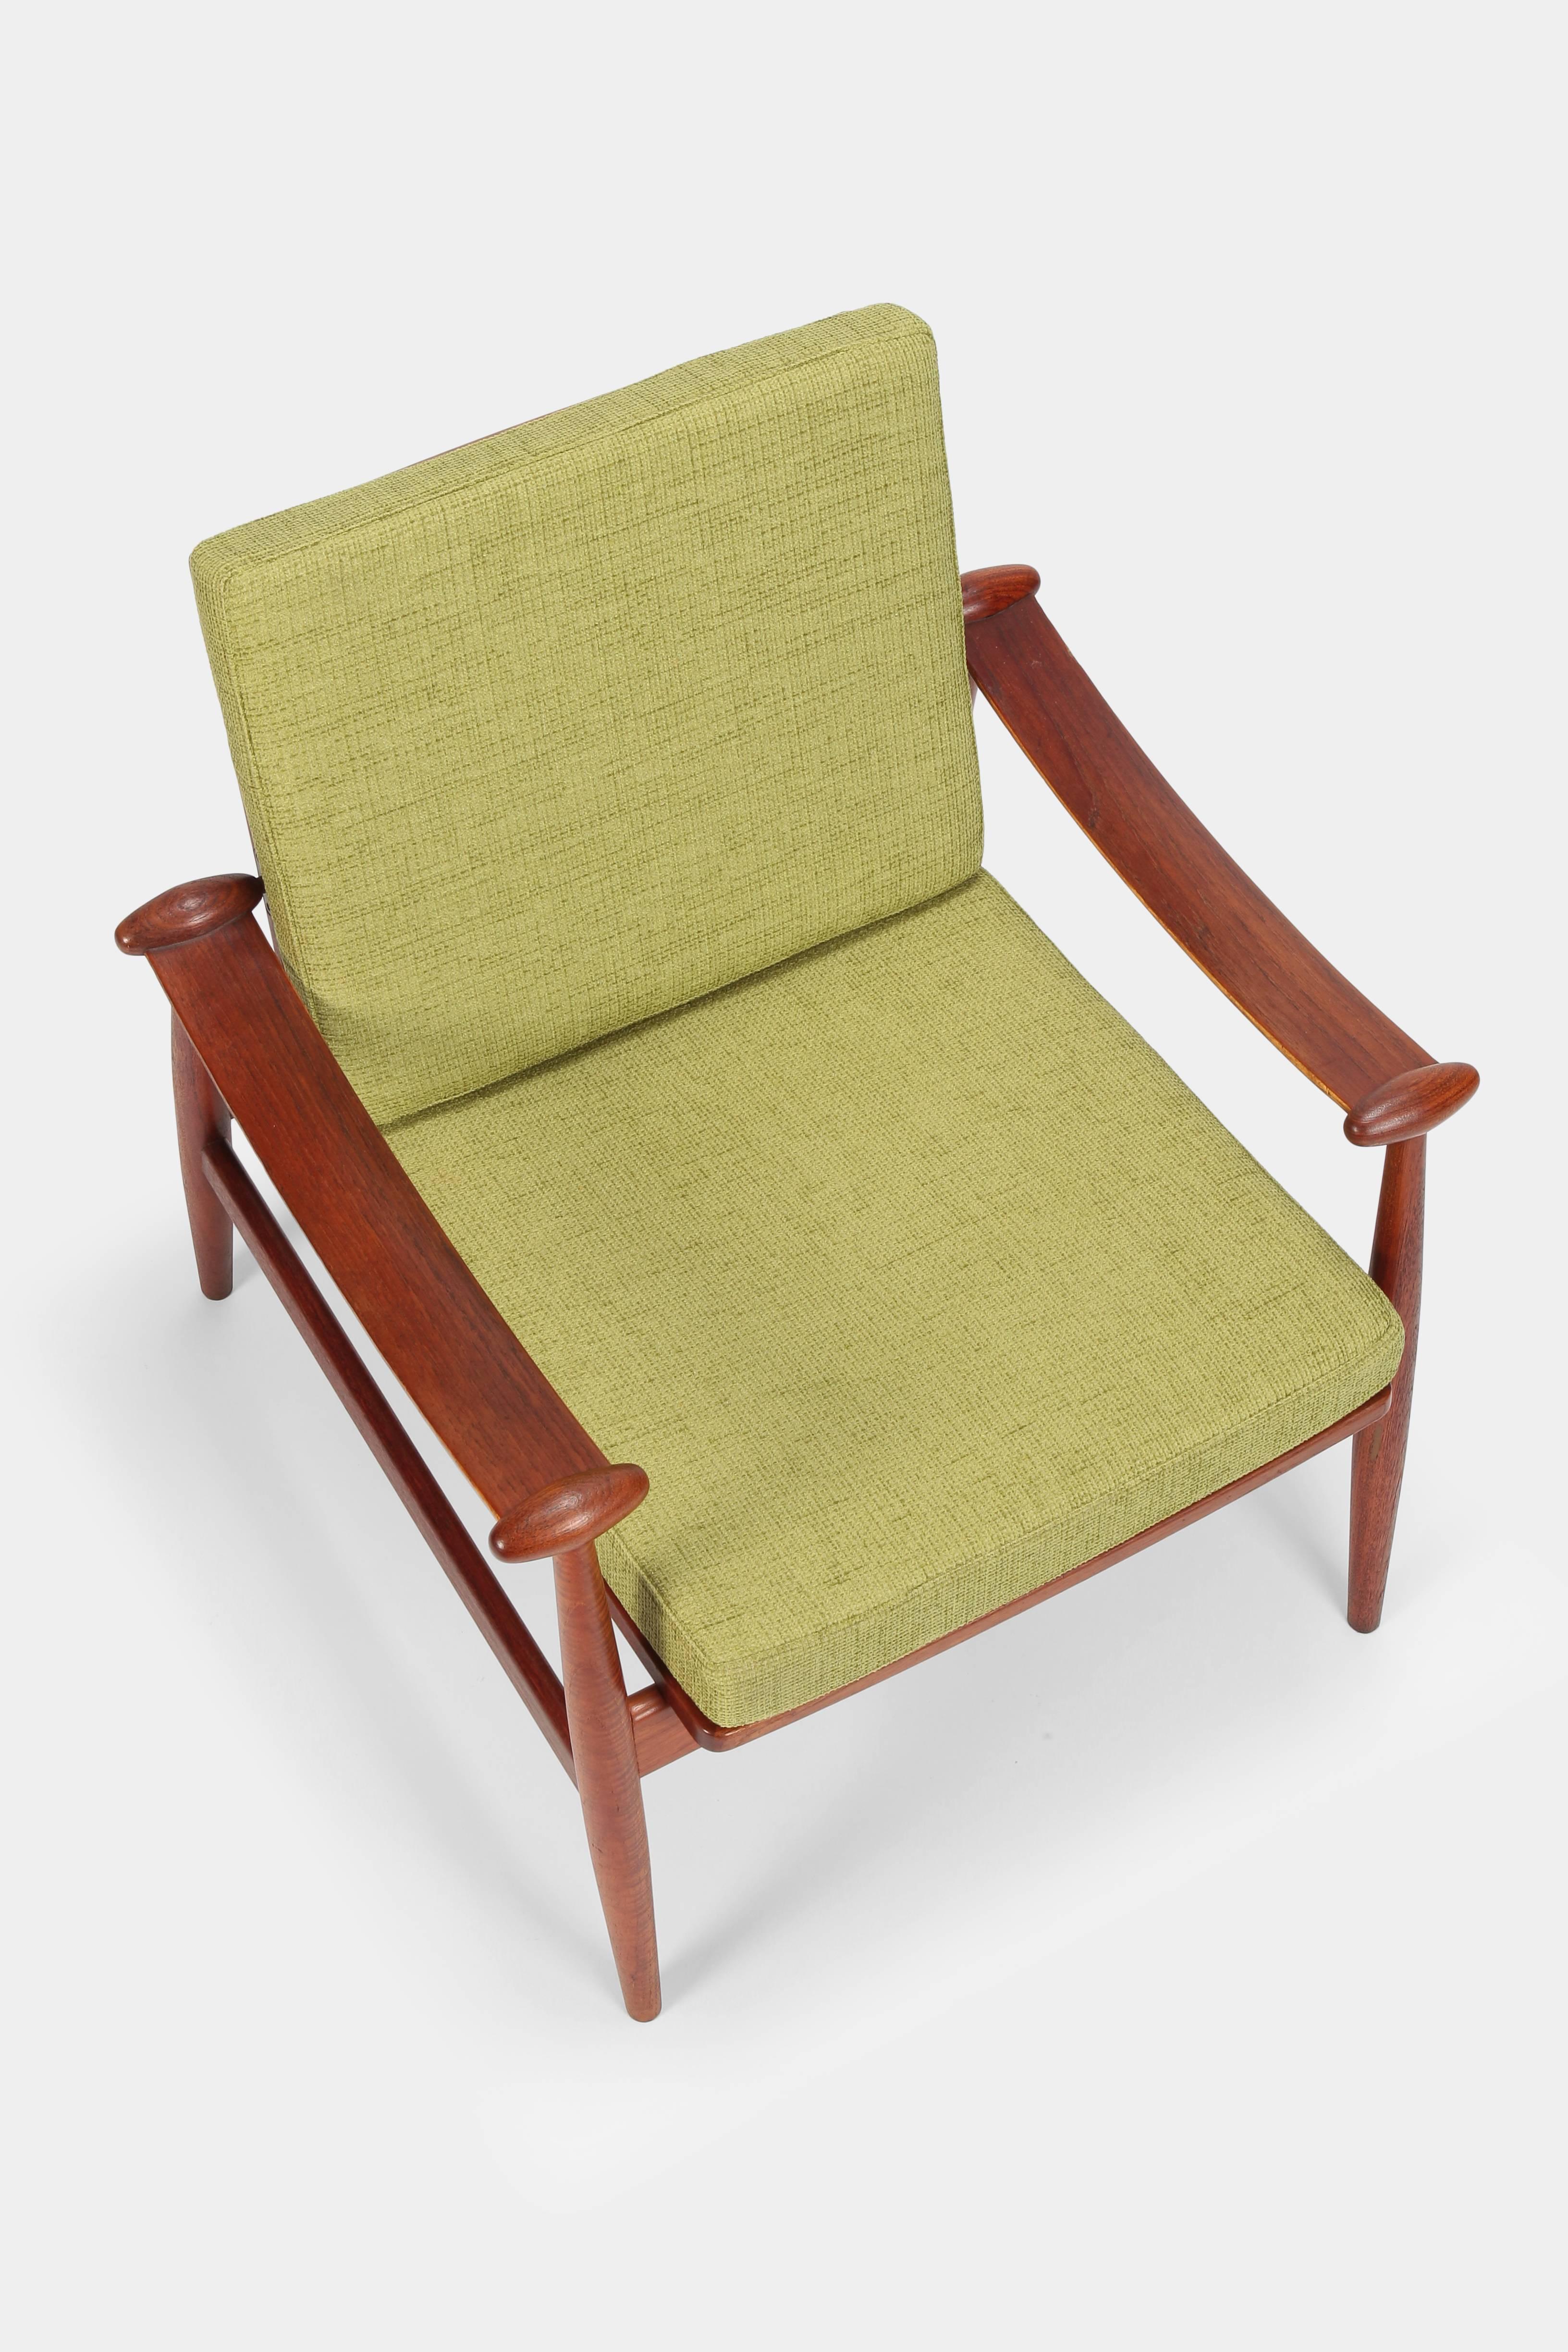 Finn Juhl “Spade” Lounge Chairs France & Daverkosen, 1960s 4